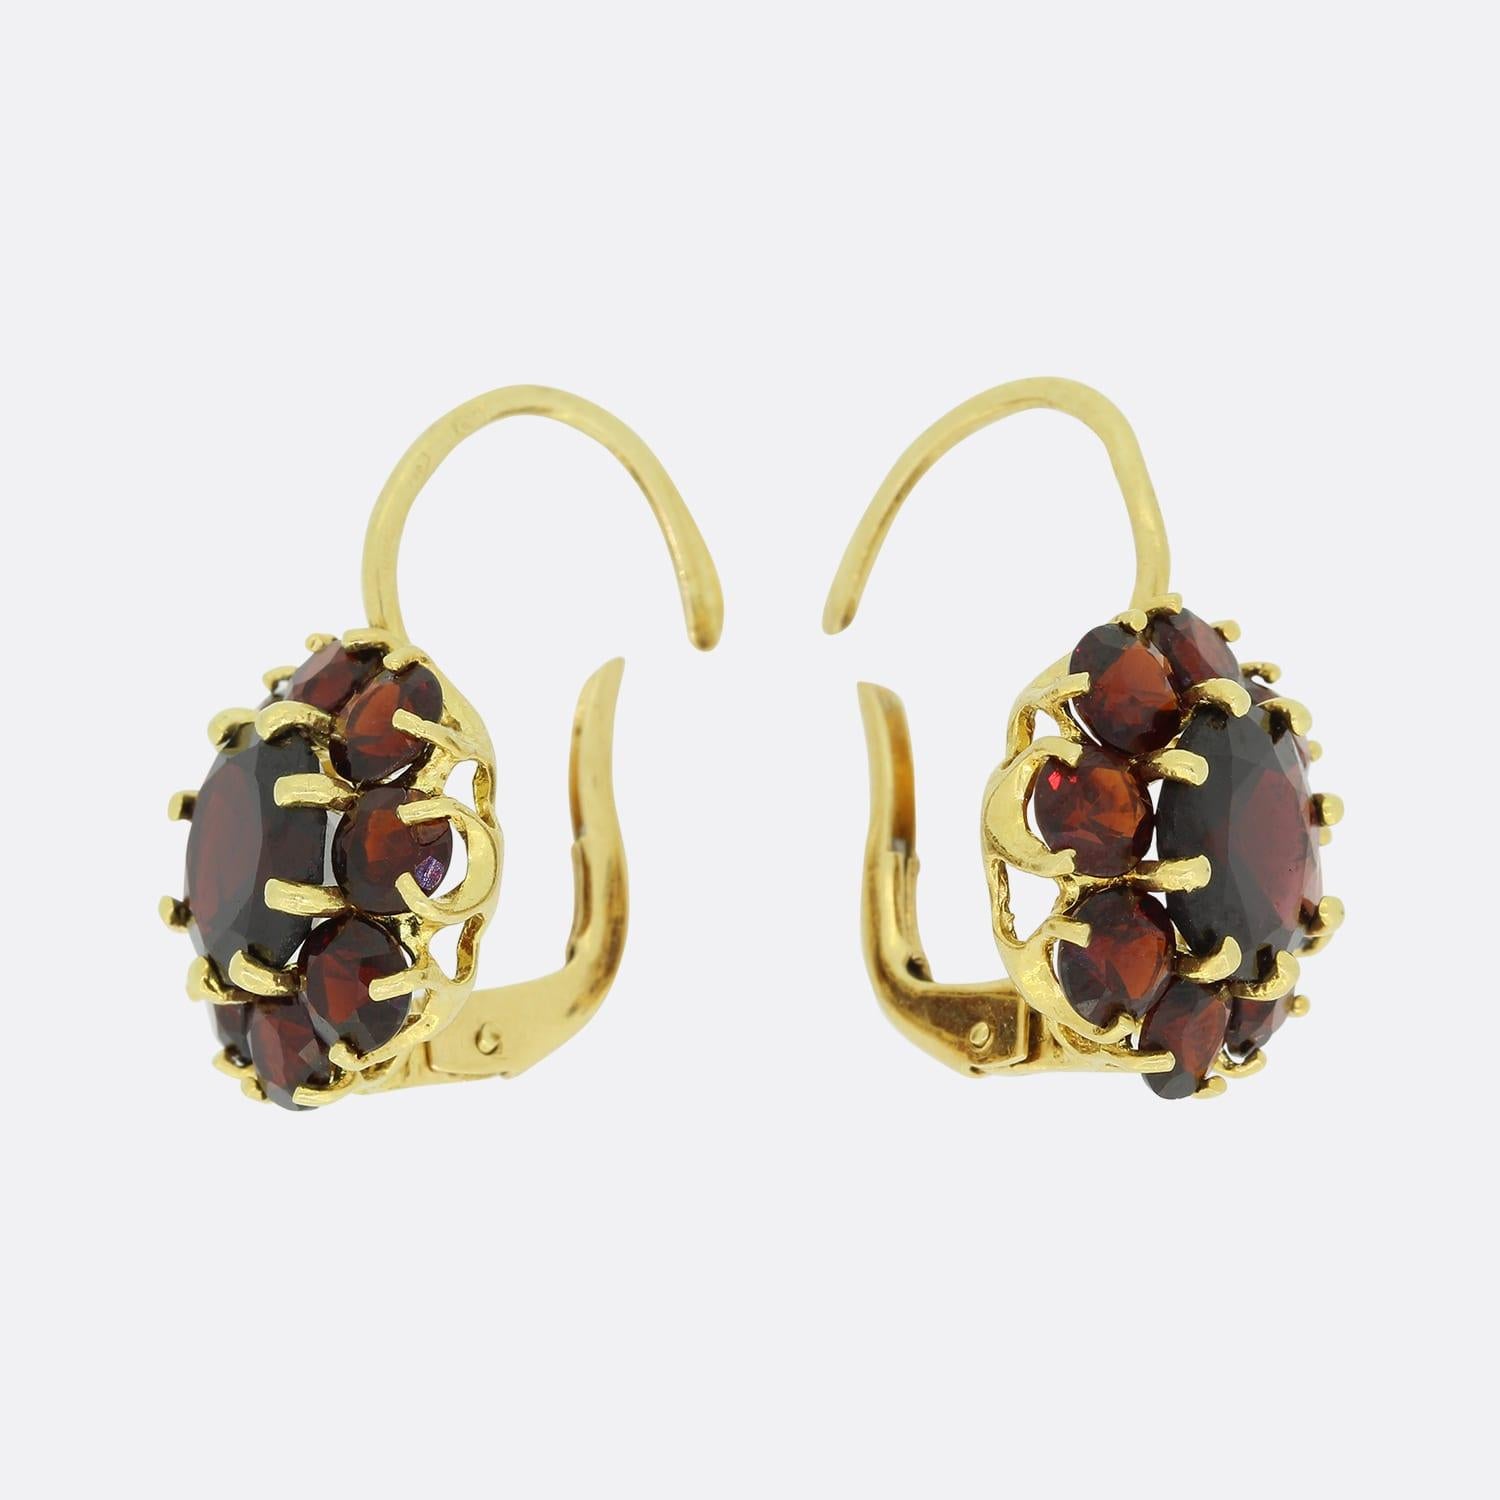 Brilliant Cut Vintage Garnet Cluster Earrings For Sale